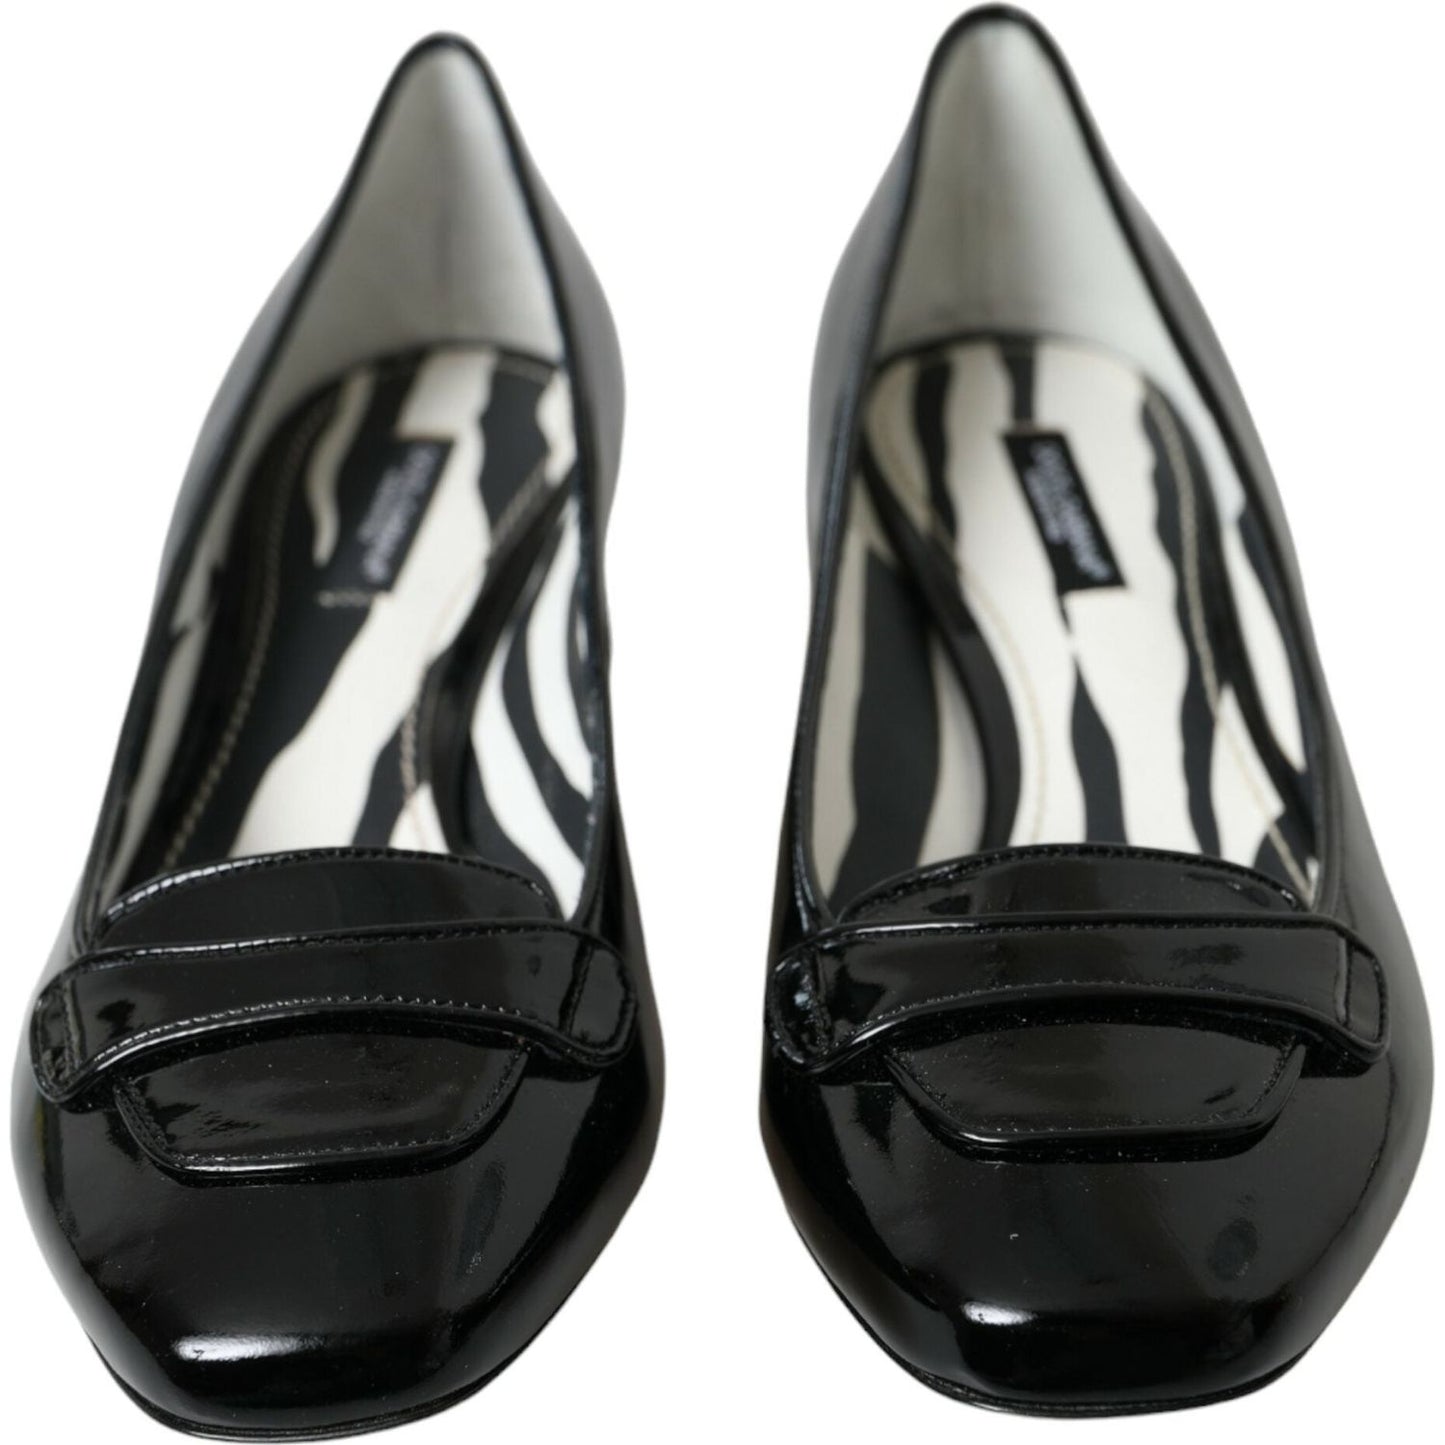 Dolce & Gabbana Black Patent Leather Block Heels Pumps Shoes black-patent-leather-block-heels-pumps-shoes